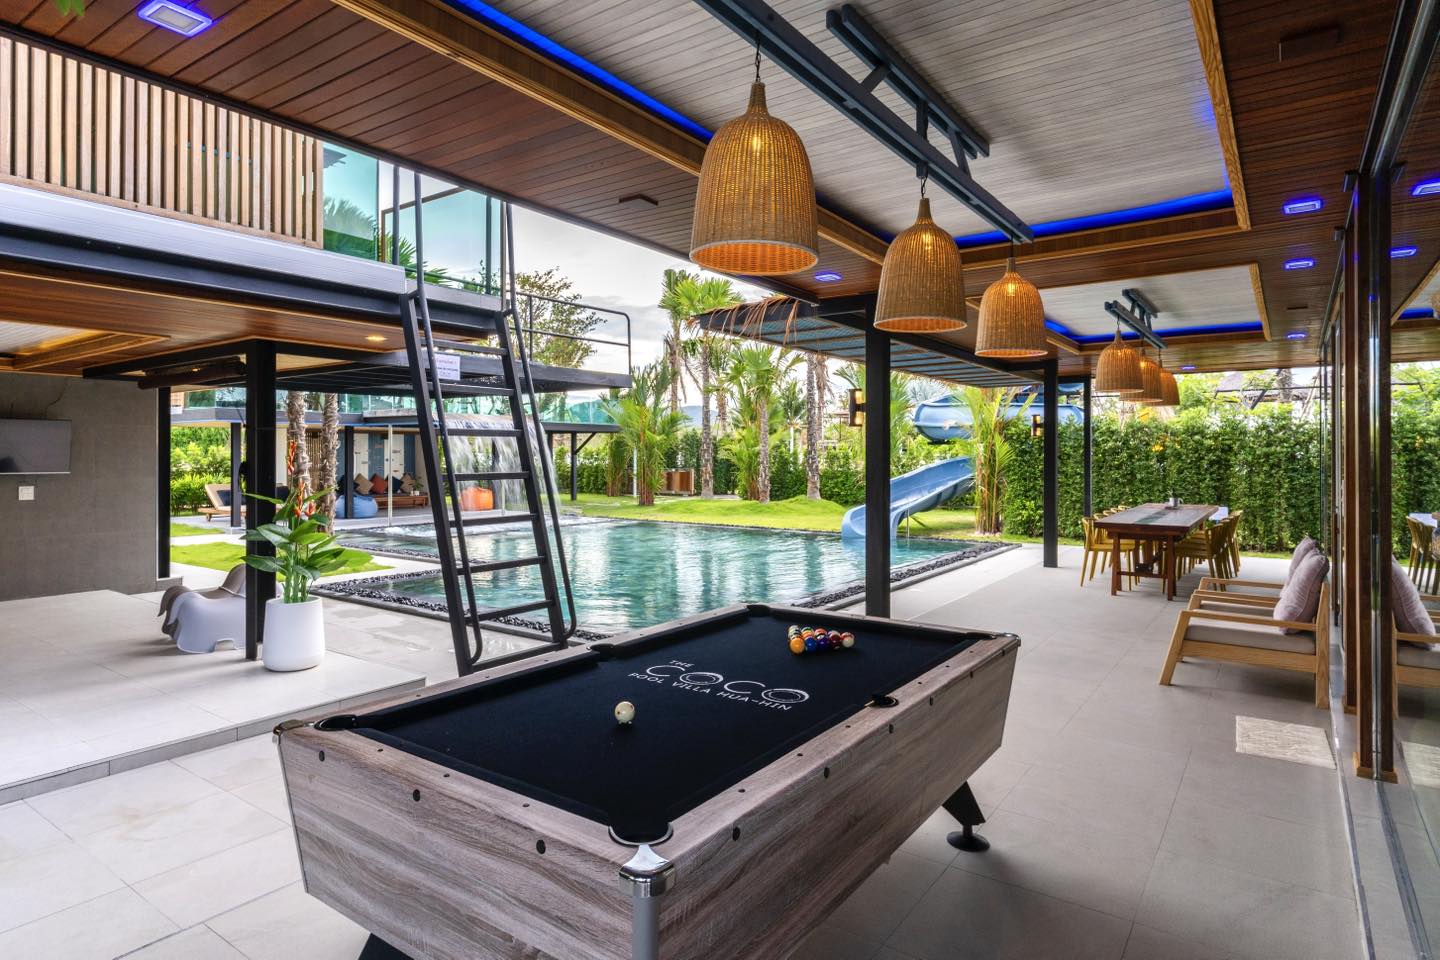 Coco pool villa